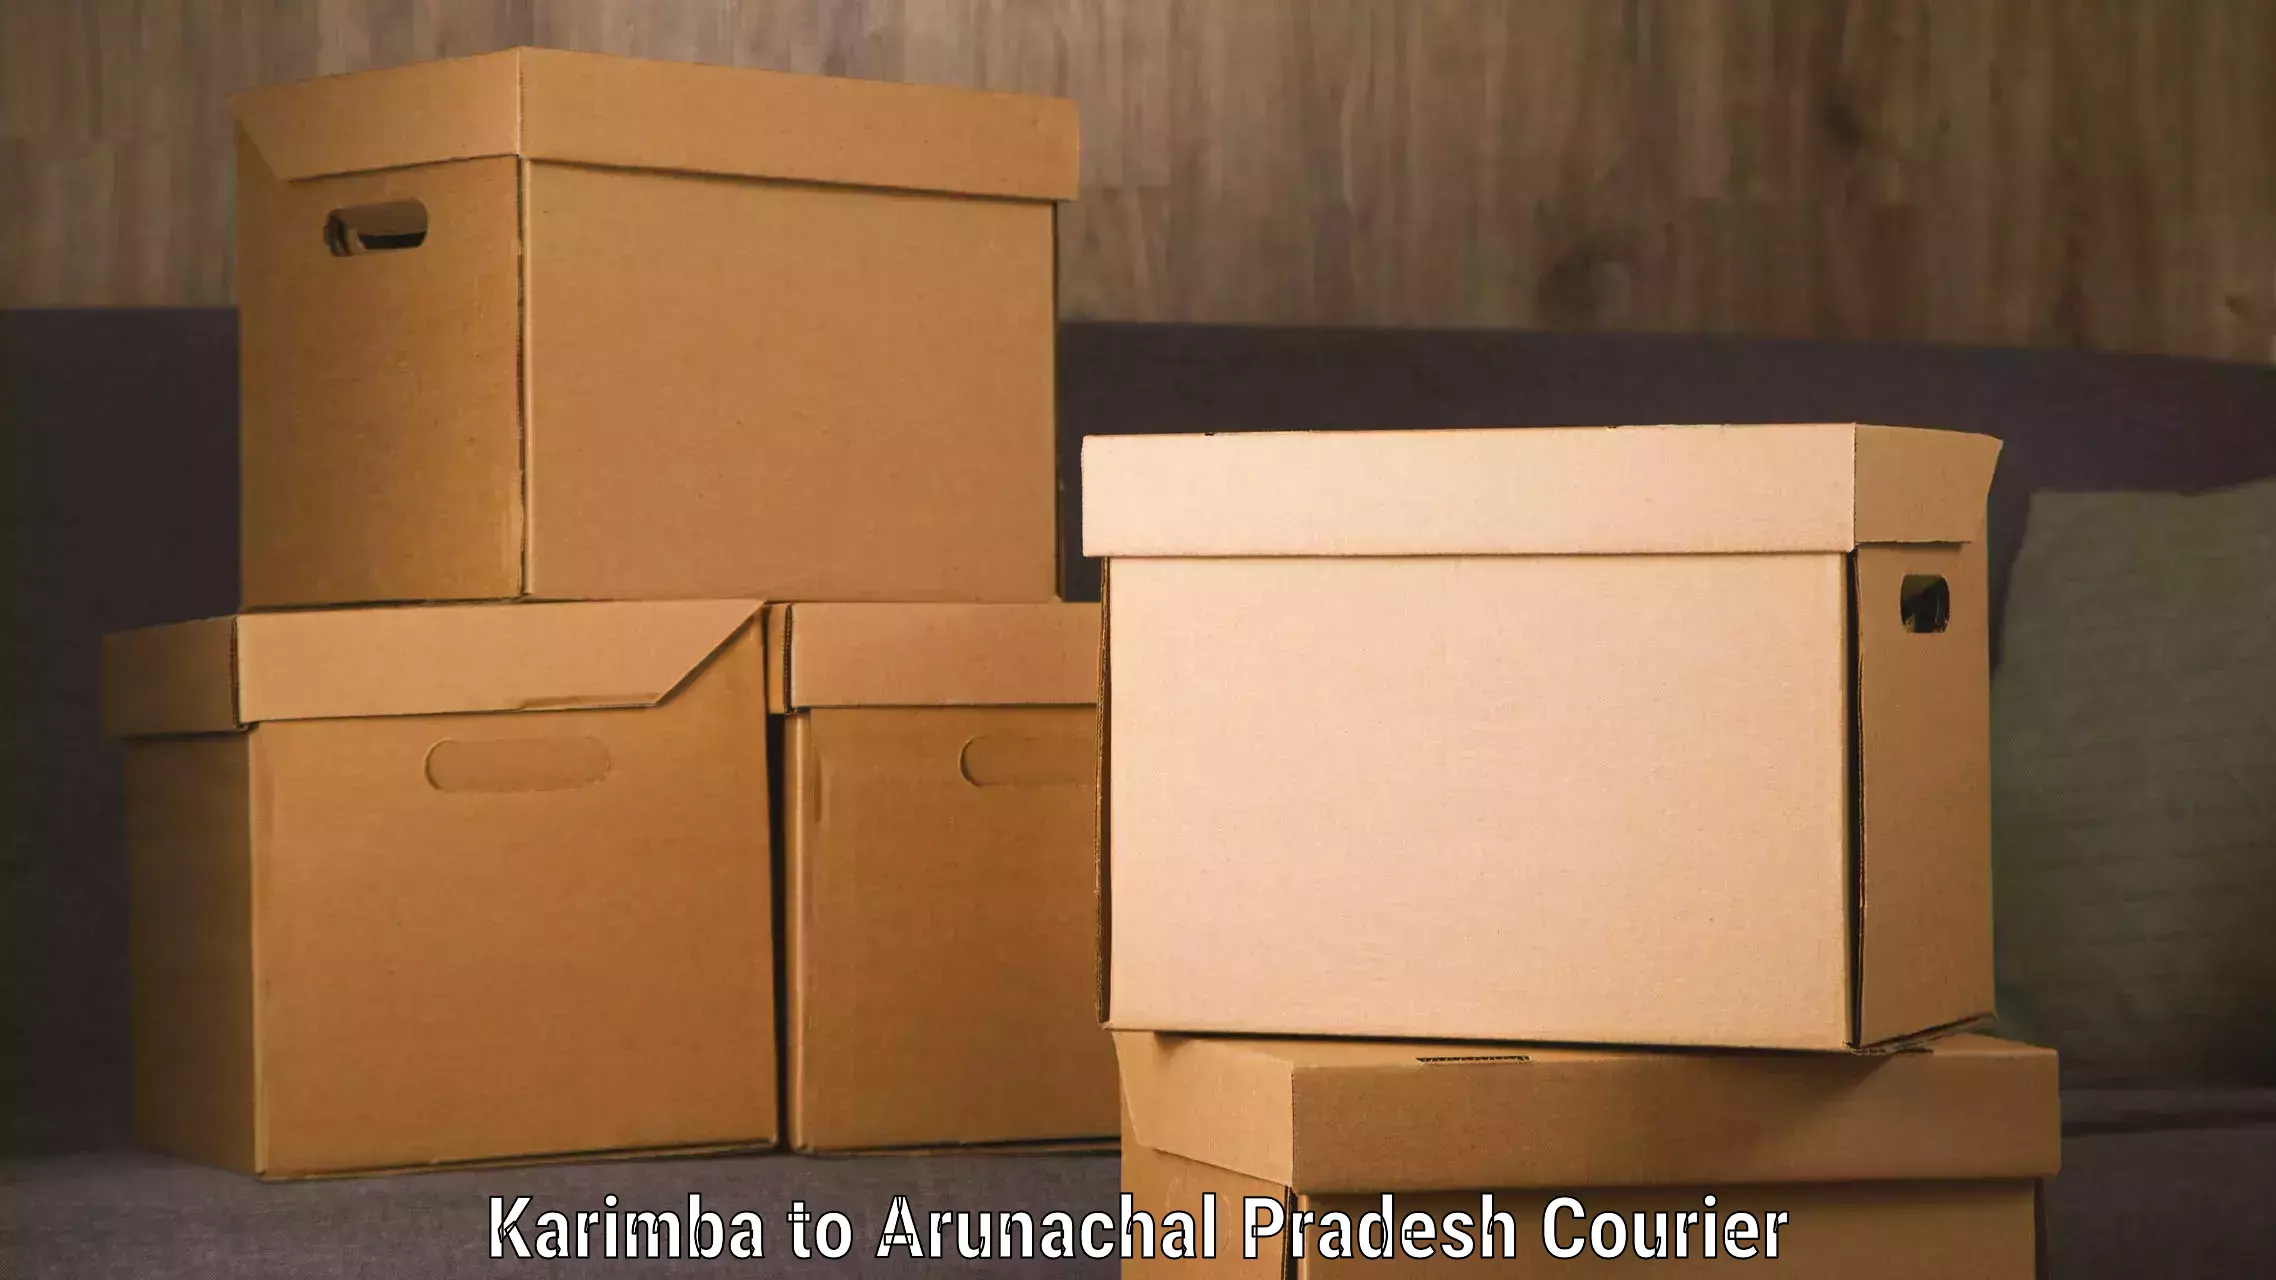 Express delivery capabilities in Karimba to Arunachal Pradesh